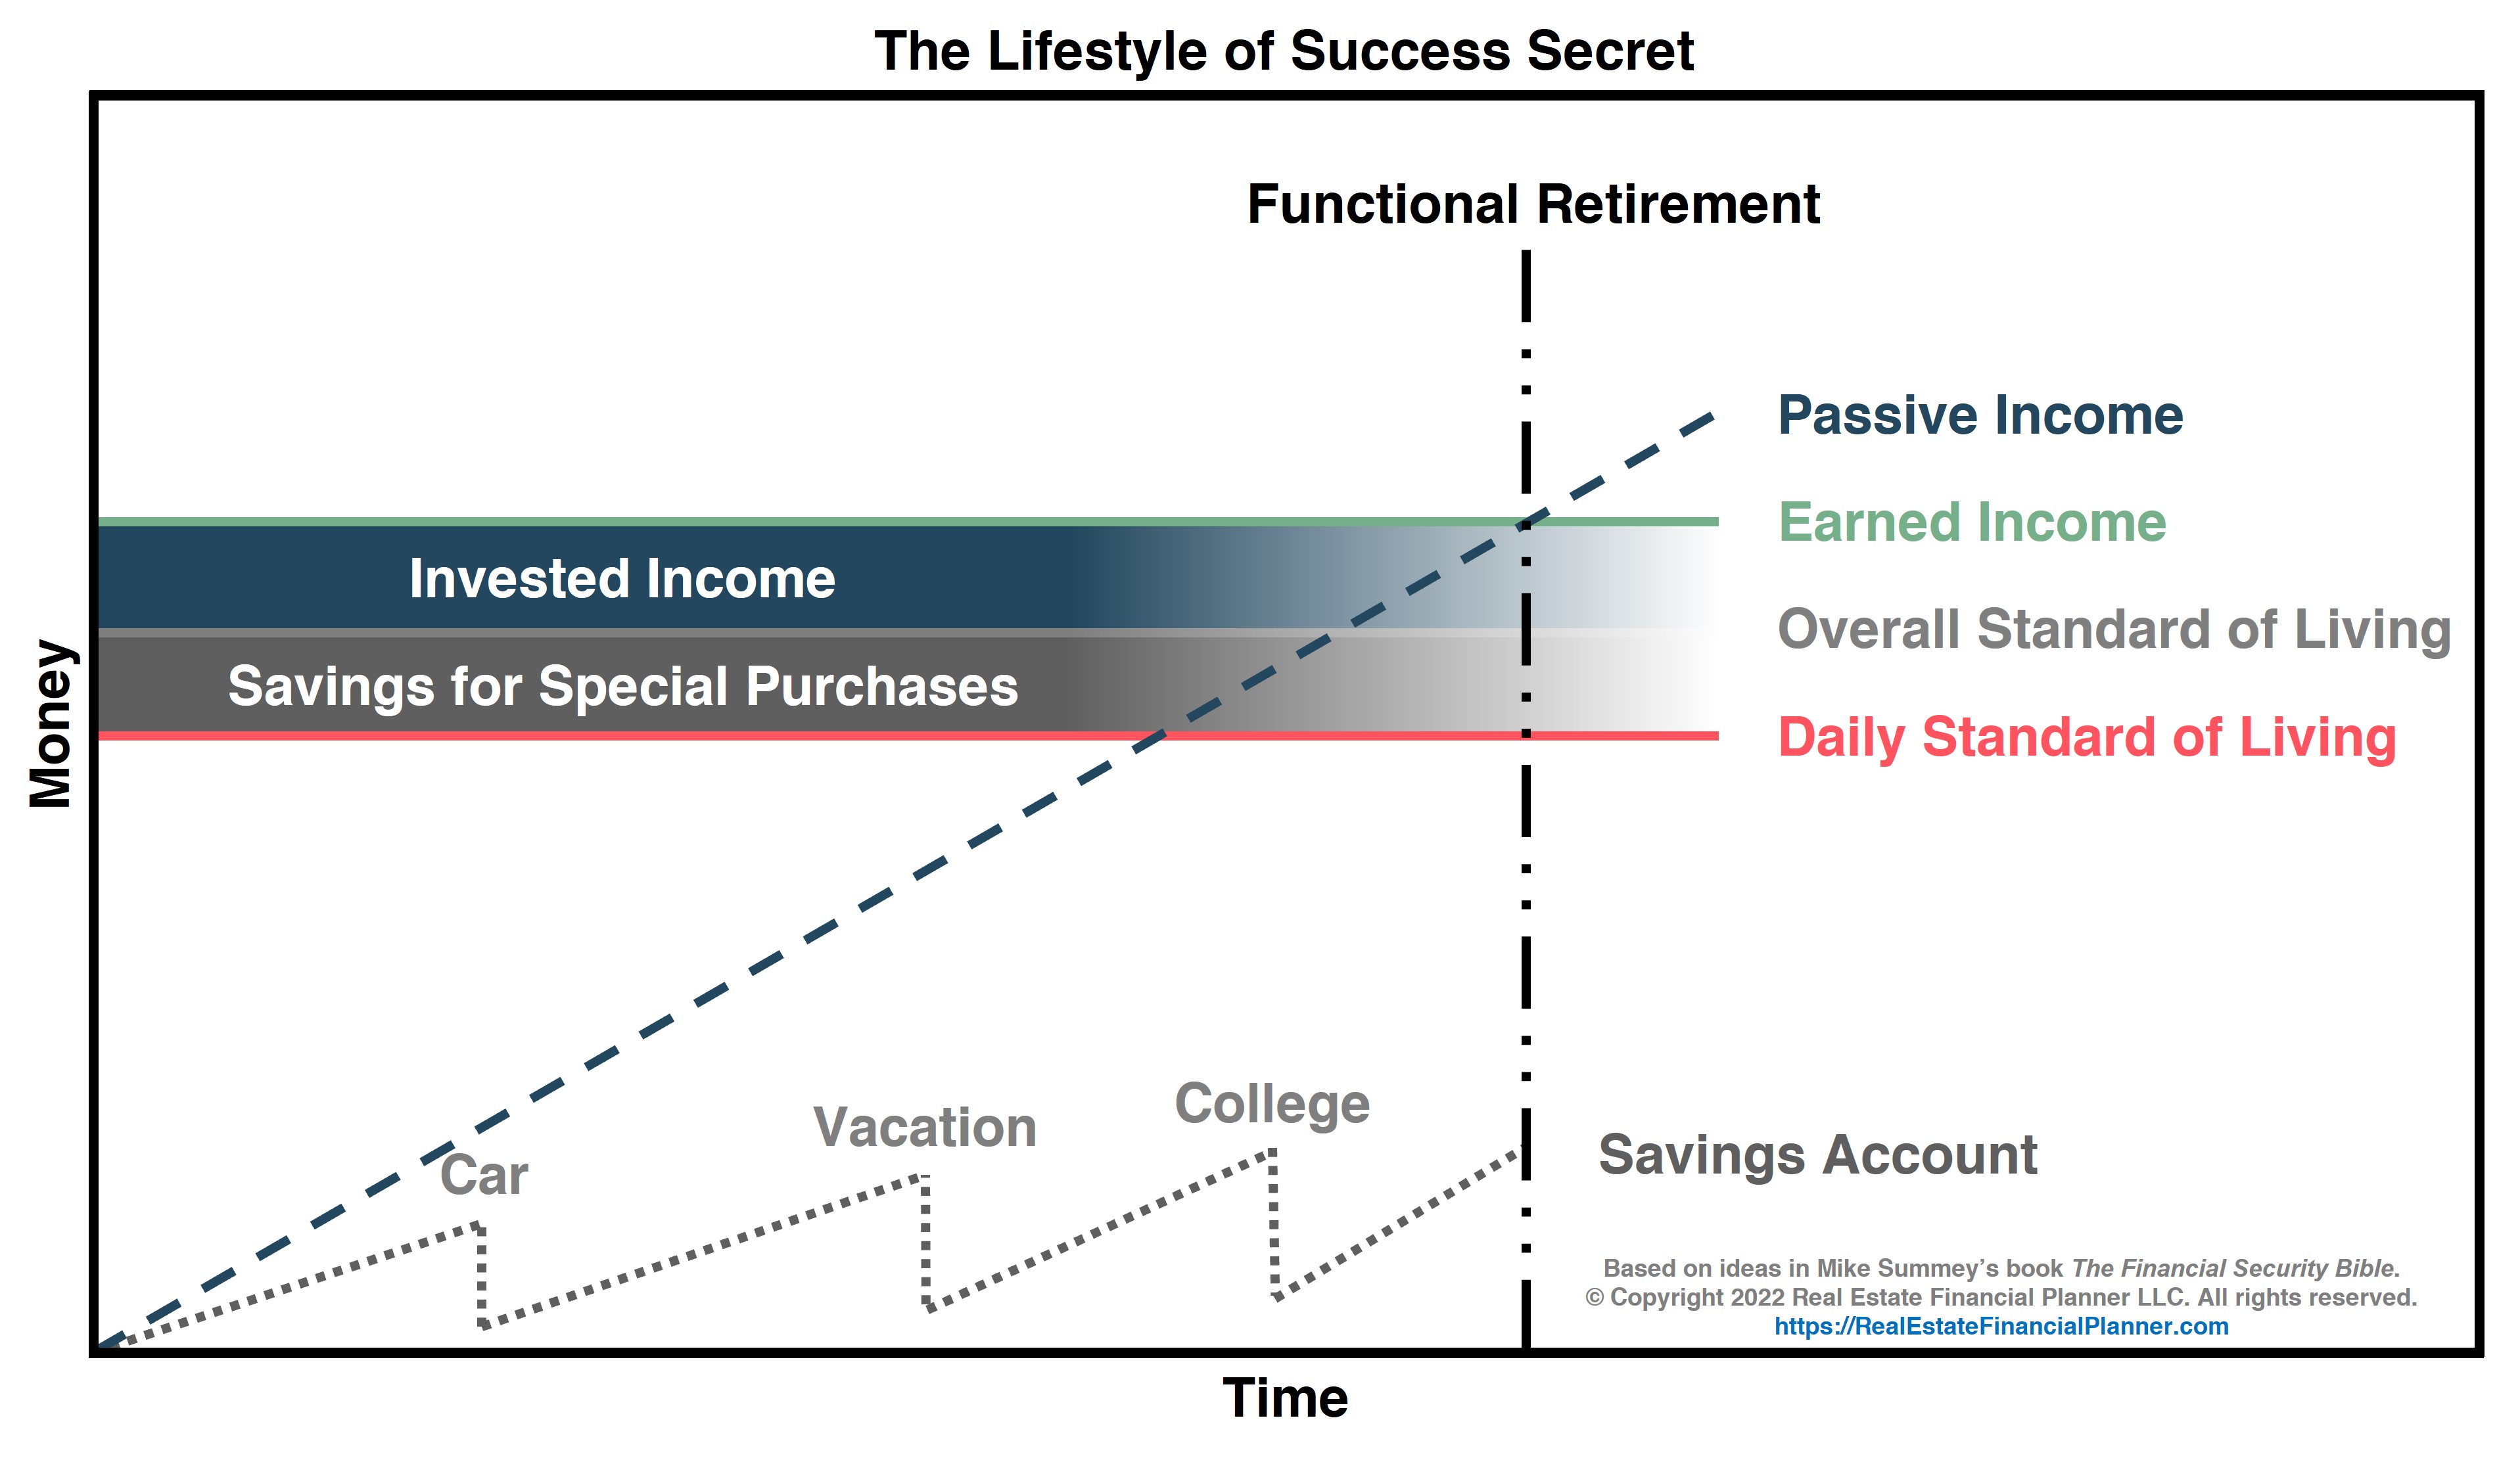 Lifestyle of Success Secret